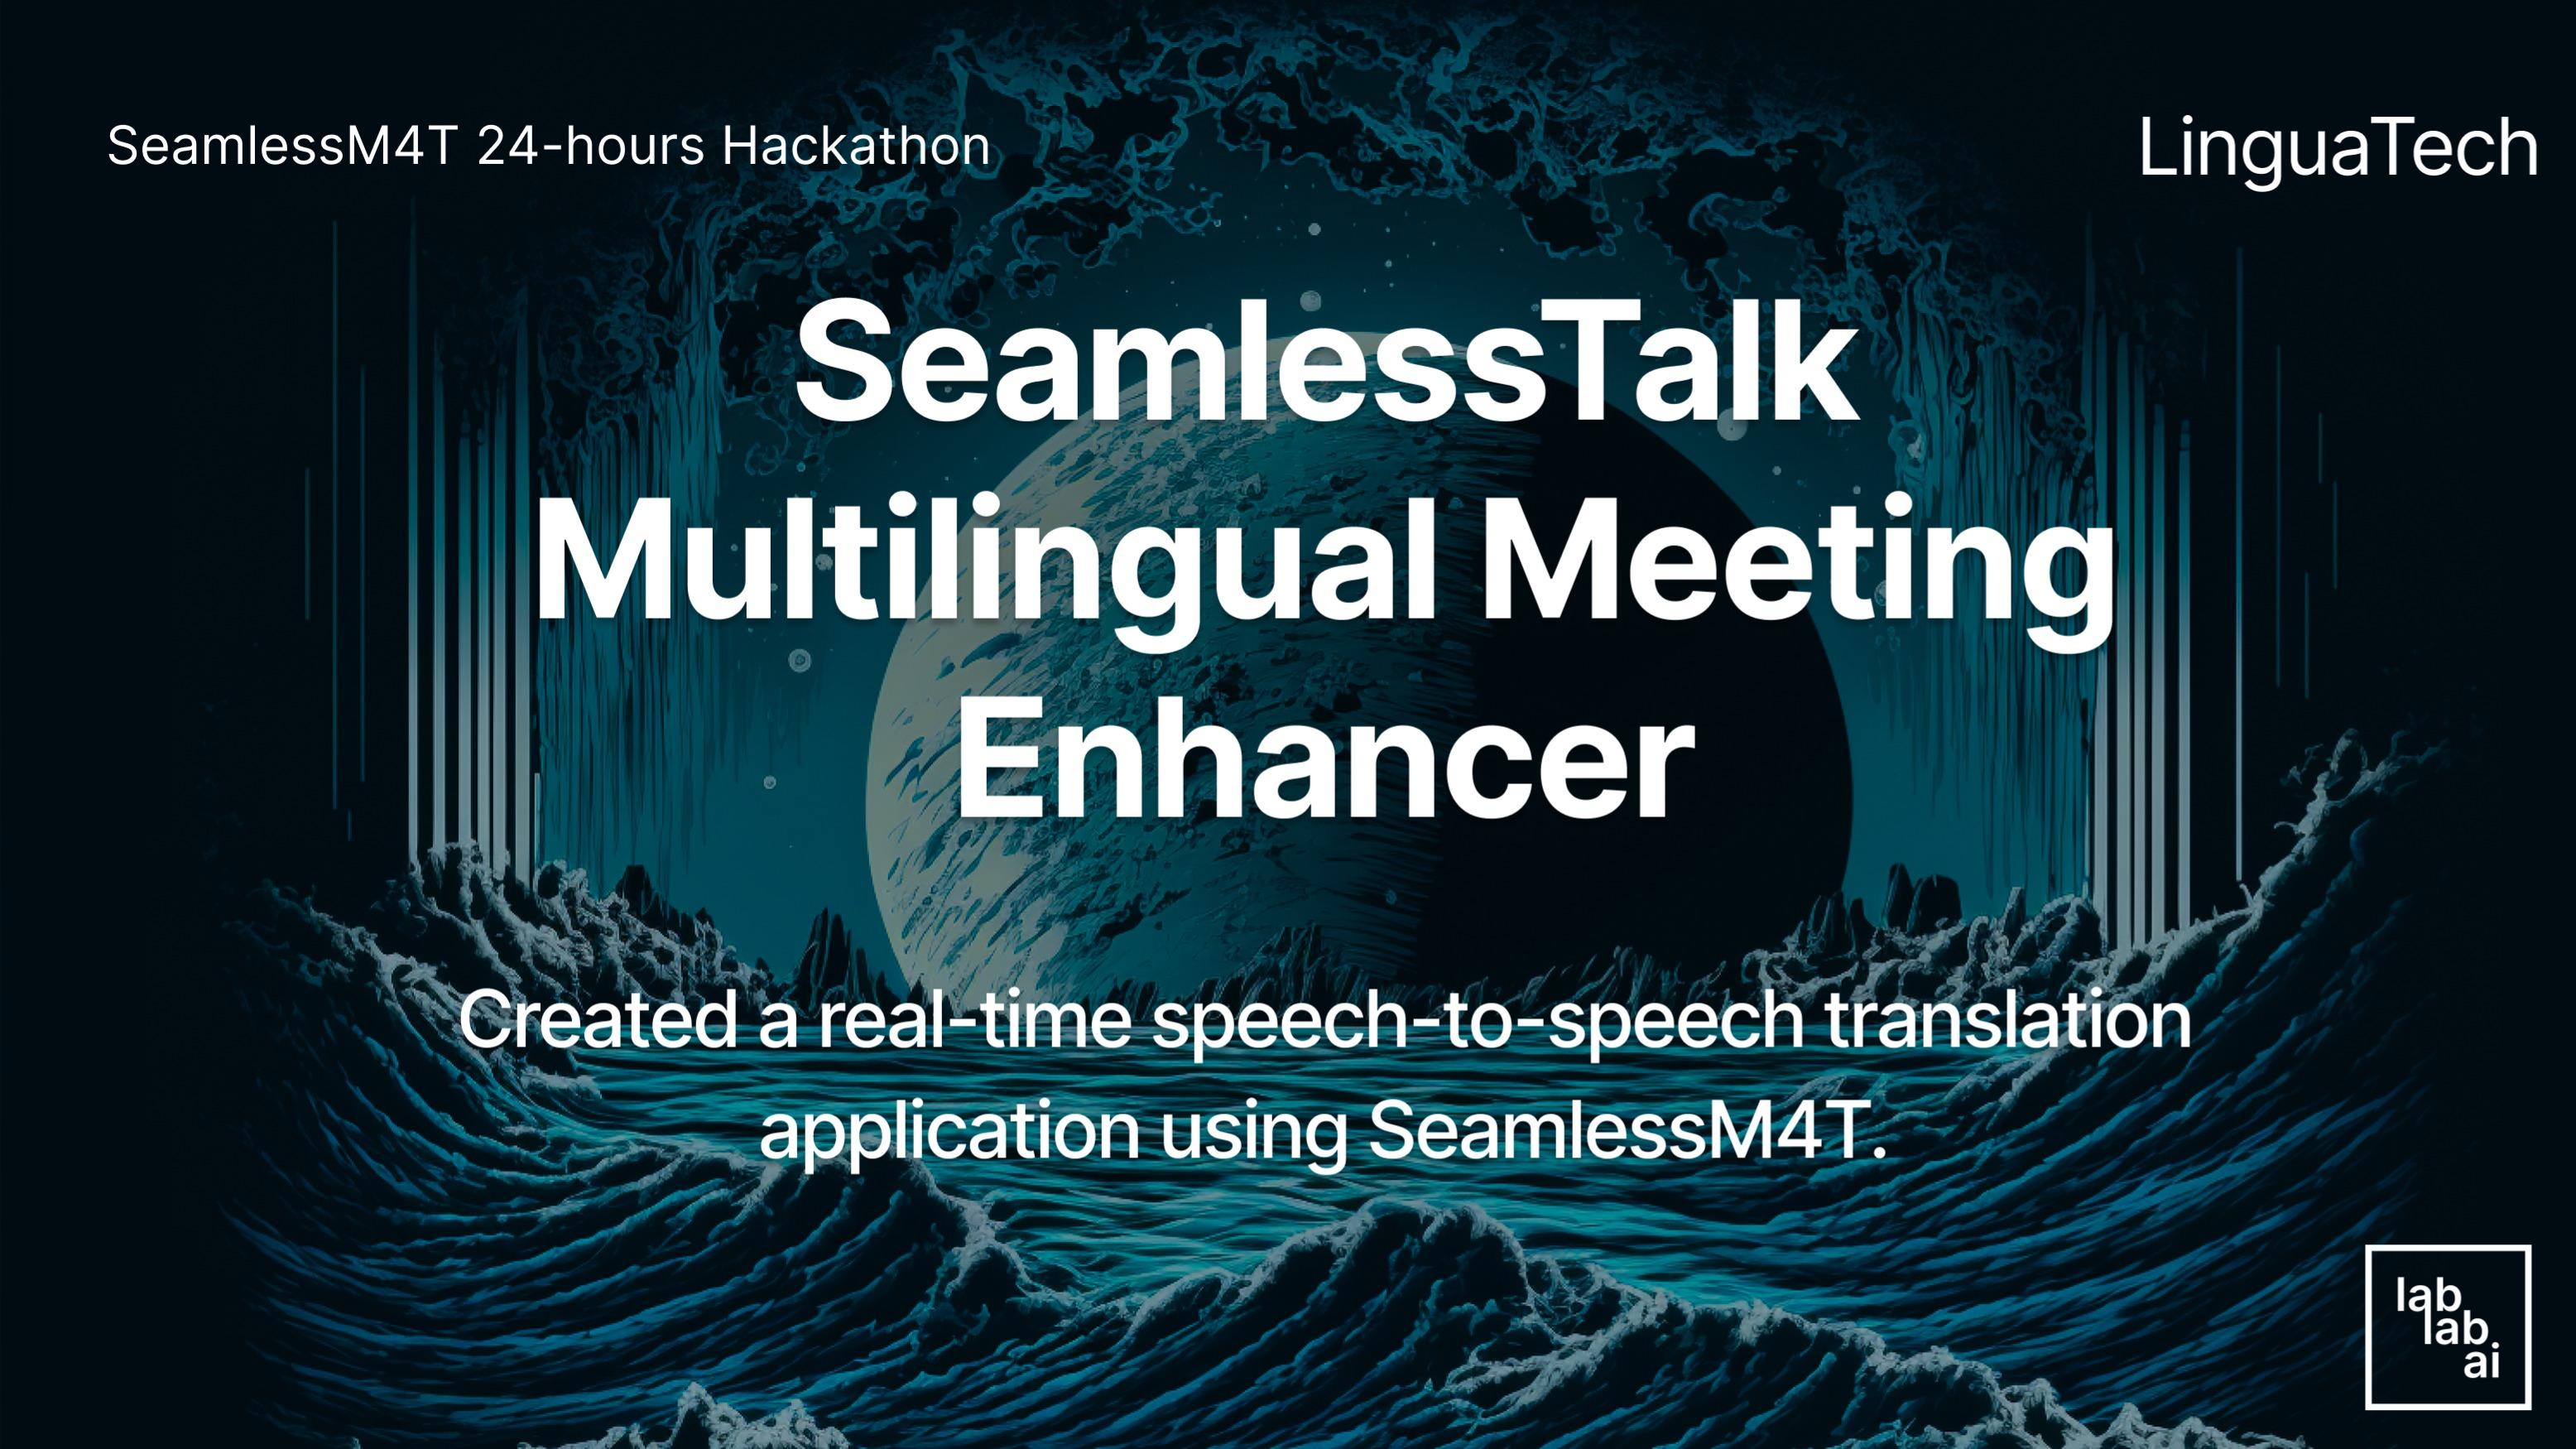 Multilingual Meeting Enhancer